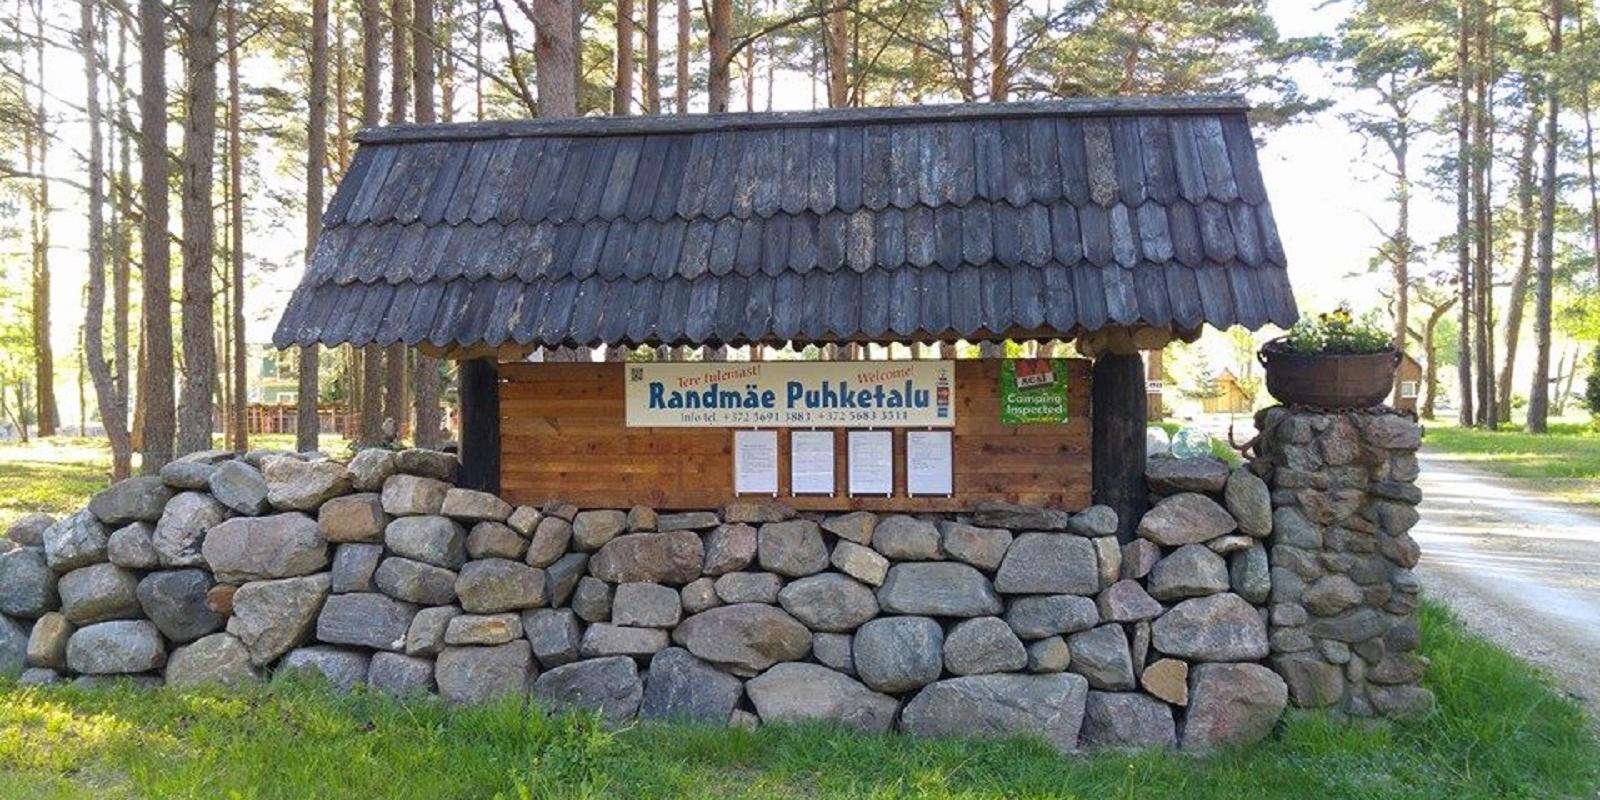 Randmäe Sportland discgolfi park